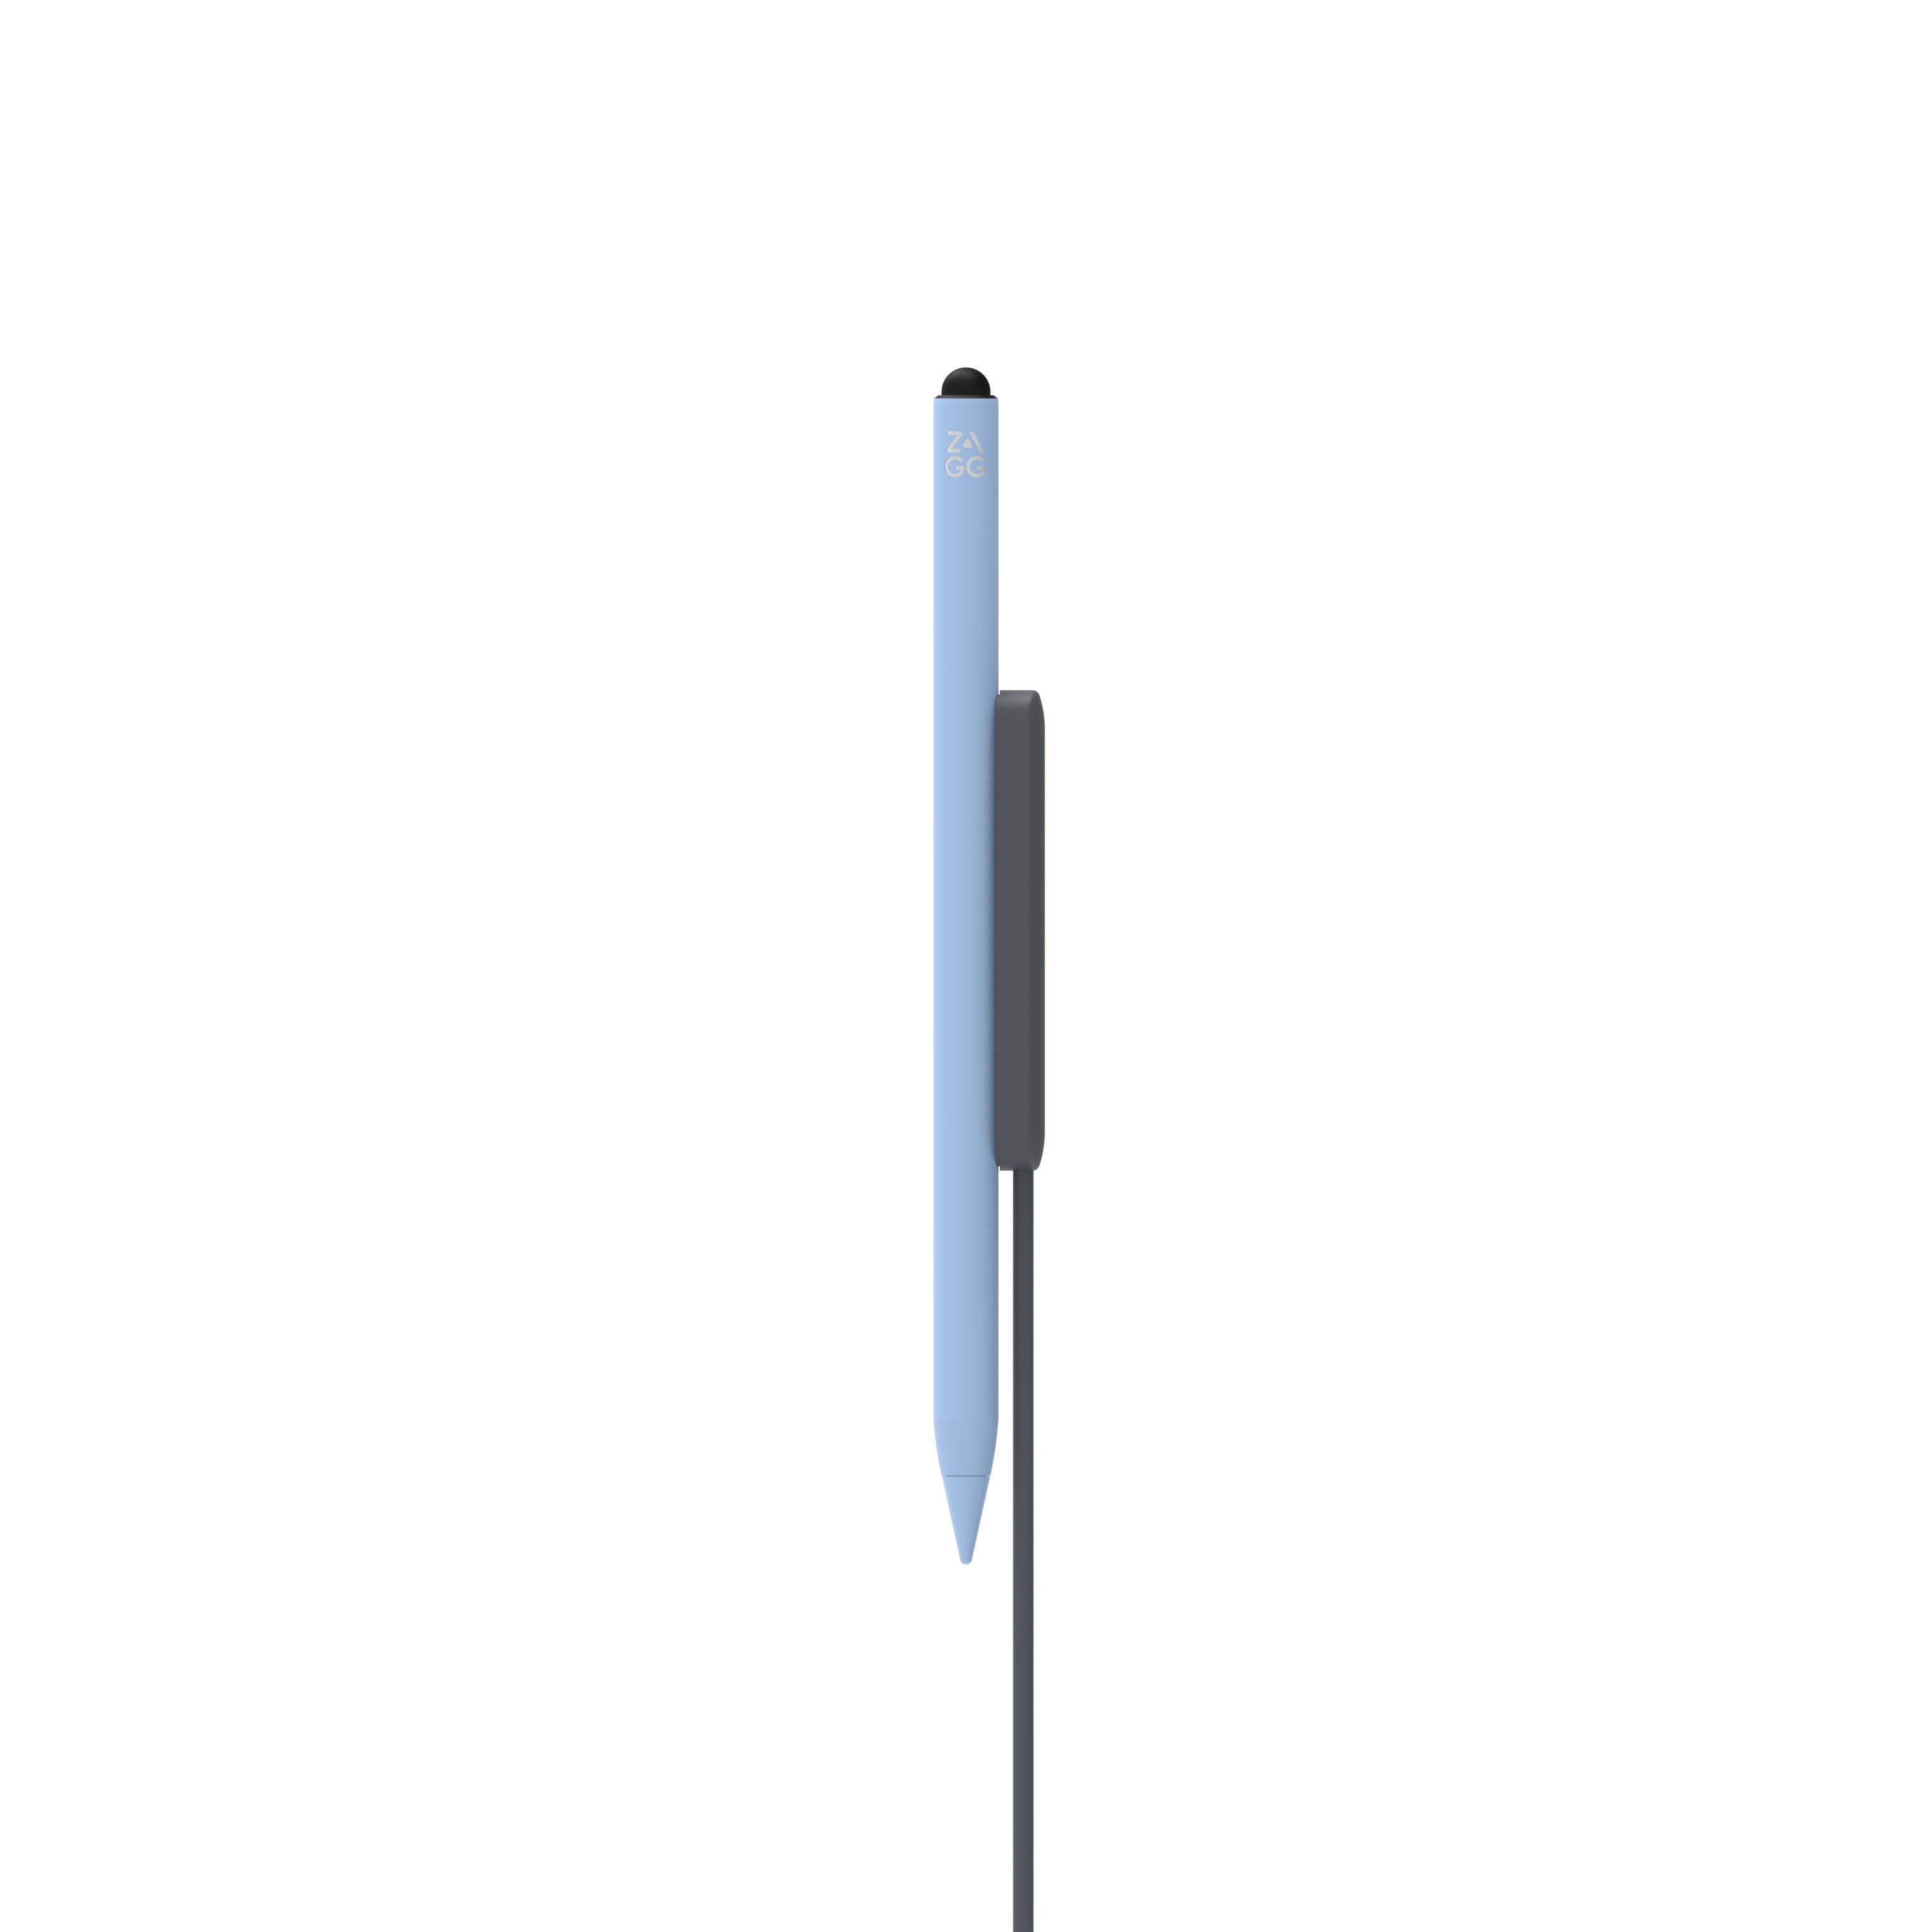 Lápiz Óptico Stylus Pro Zagg para iPad con carga inalámbrica Color Azul